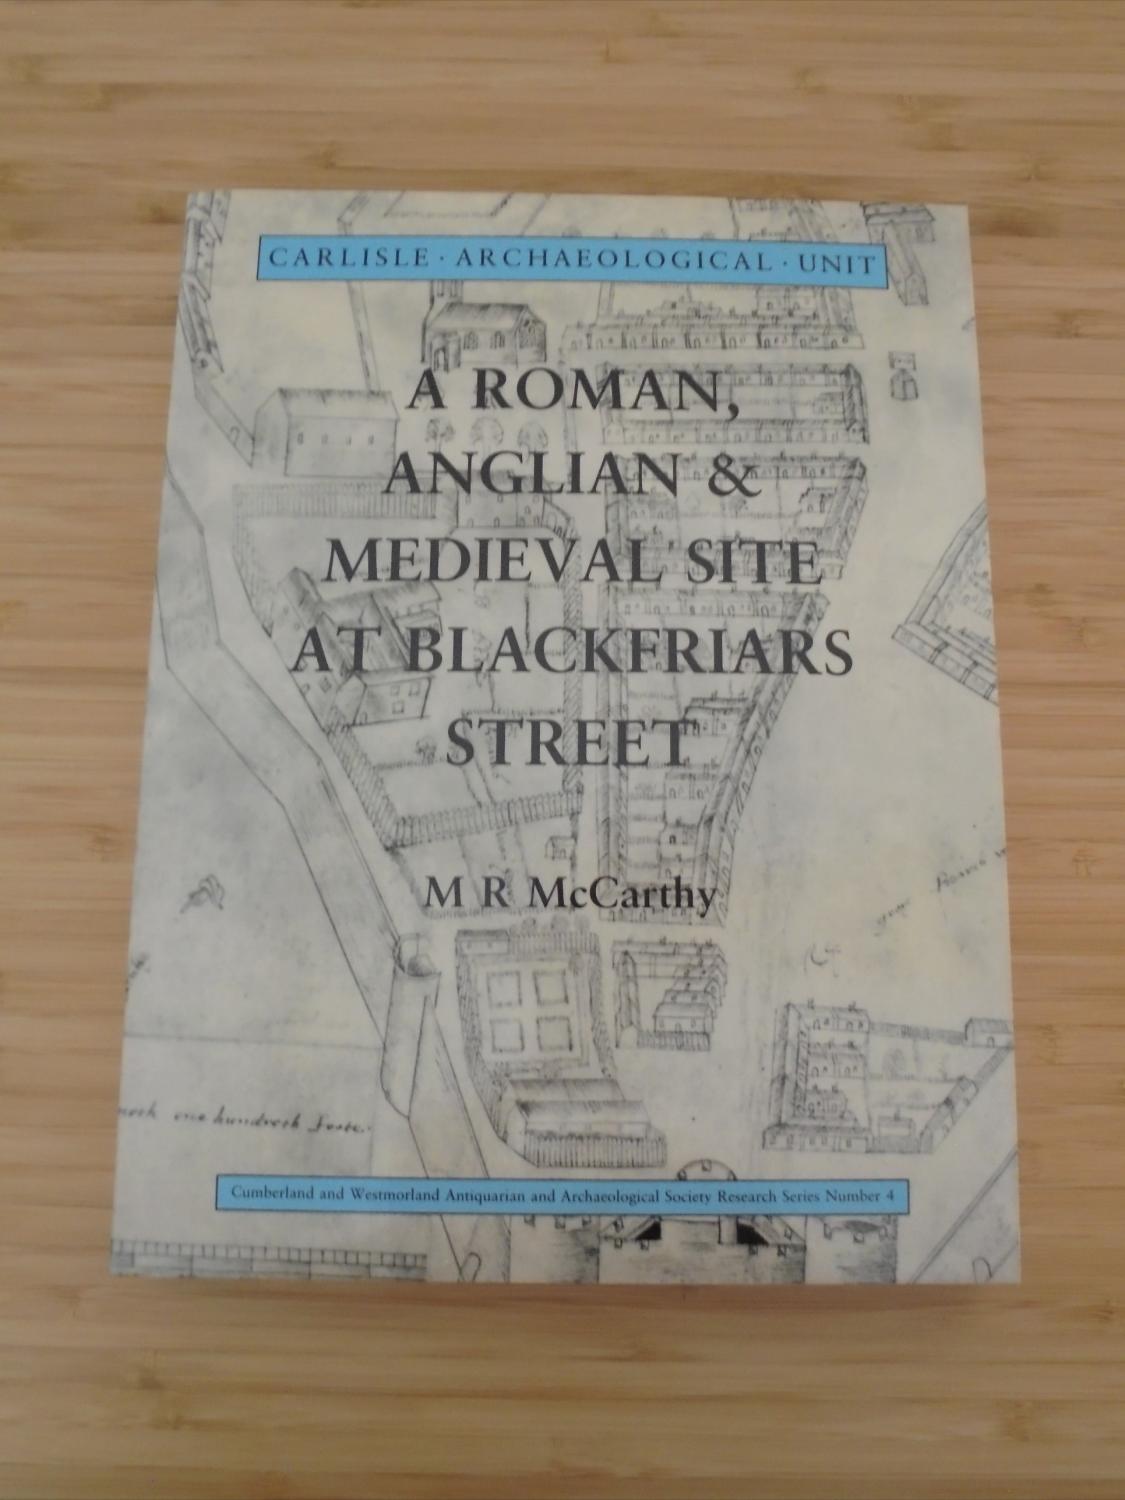 A Roman, Anglian and Medieval Site at Blackfriars Street, Carlisle ...